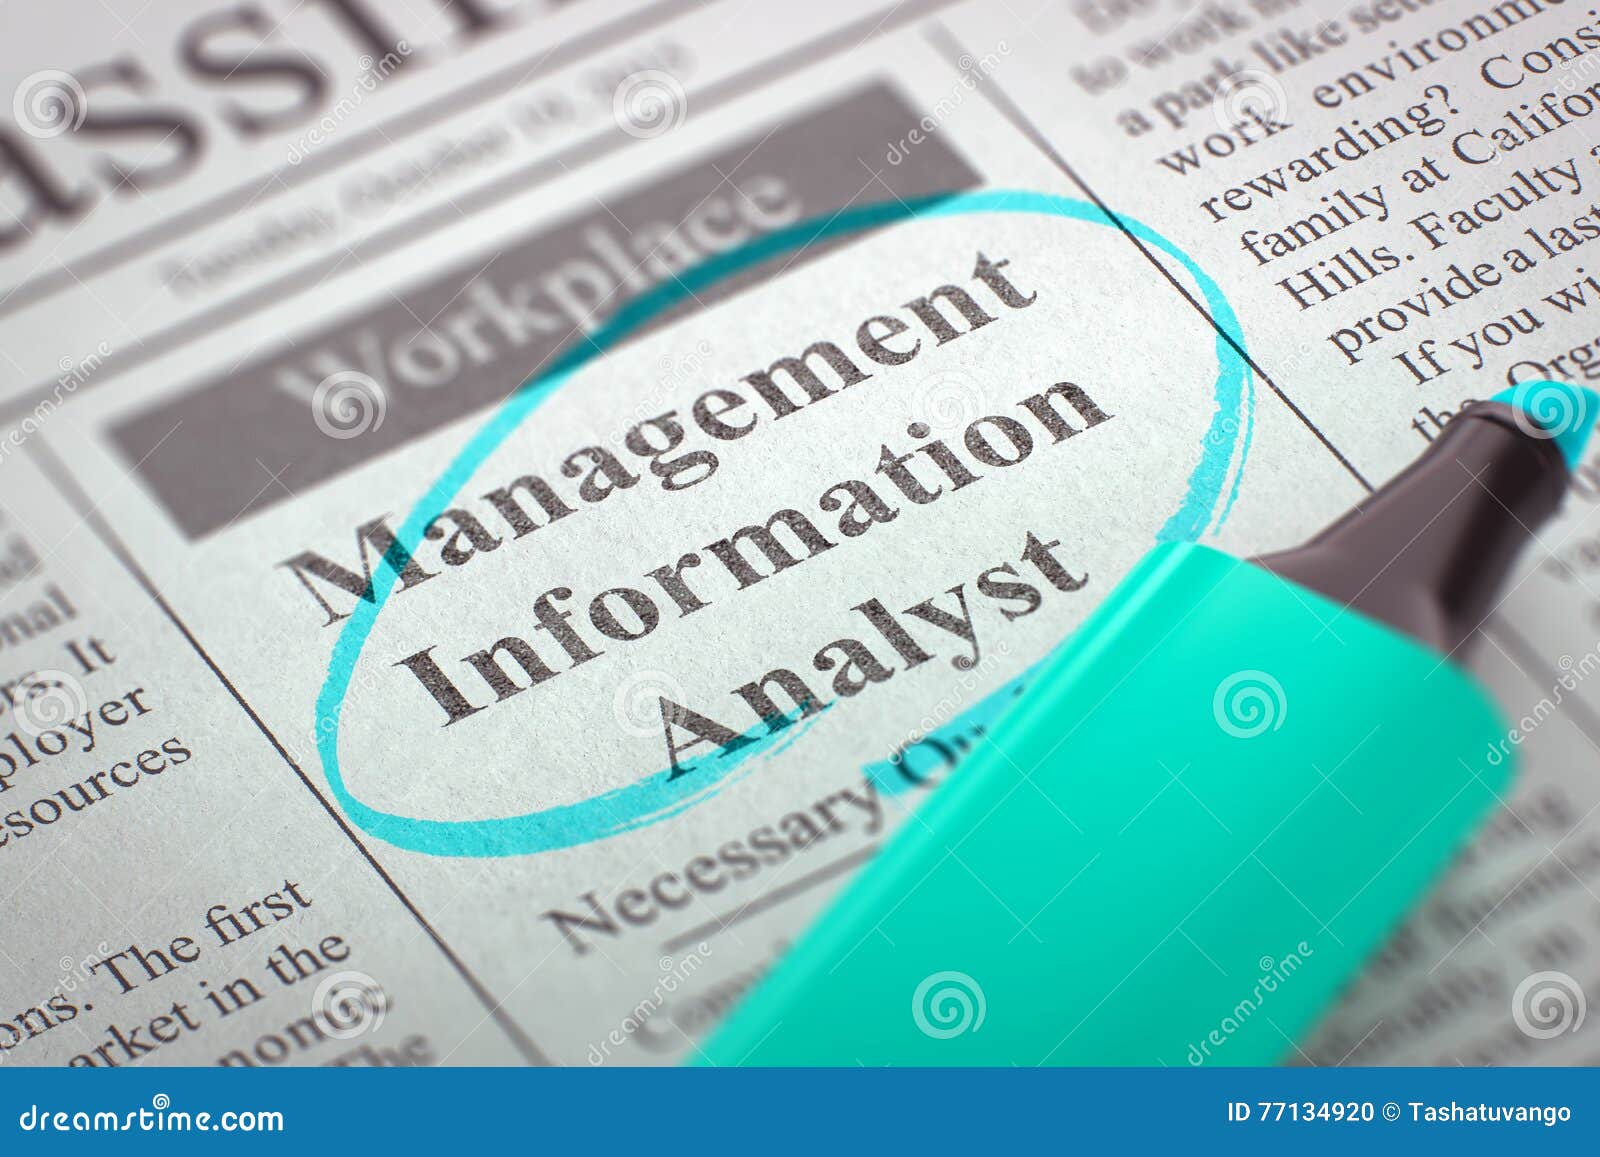 Management information analyst home+depot jobs